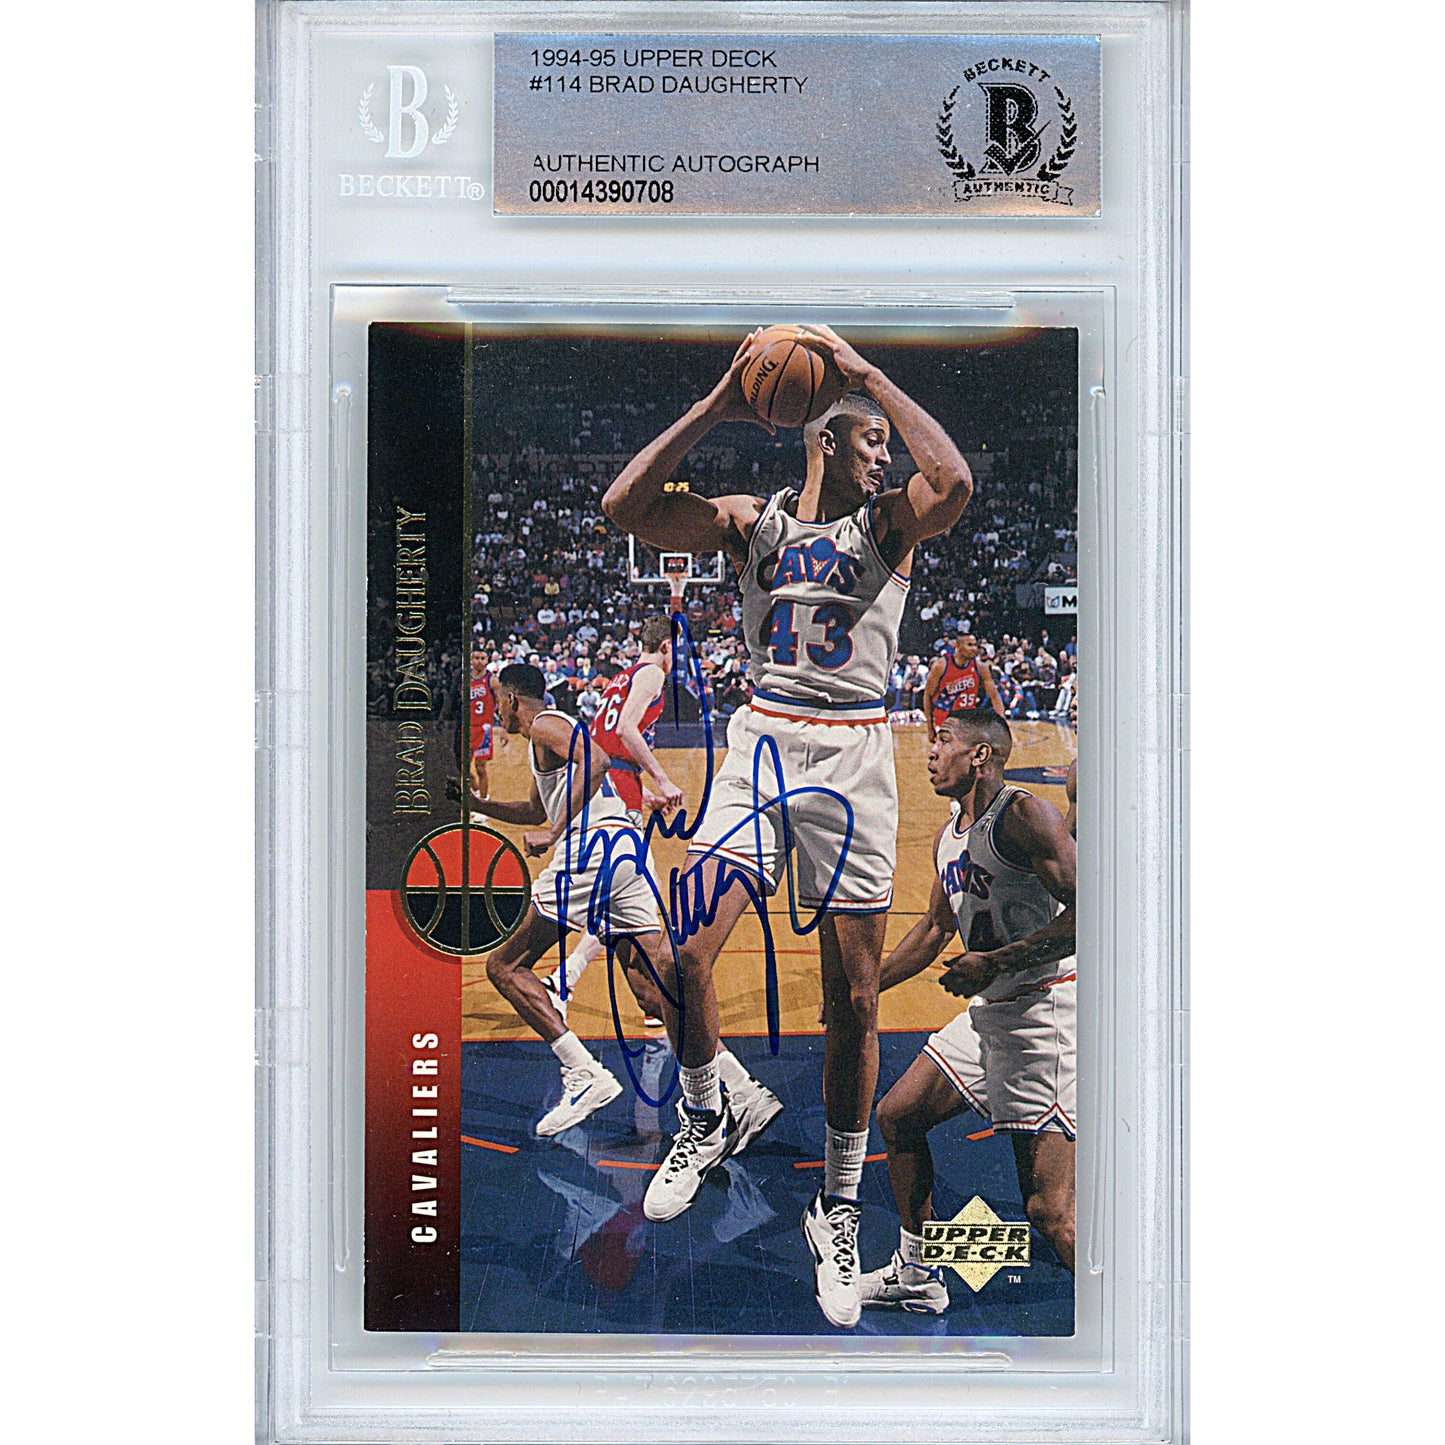 Basketballs- Autographed- Brad Daugherty Signed Cleveland Cavaliers 1994-1995 Upper Deck Basketball Card Beckett Slabbed 00014390708 - 101